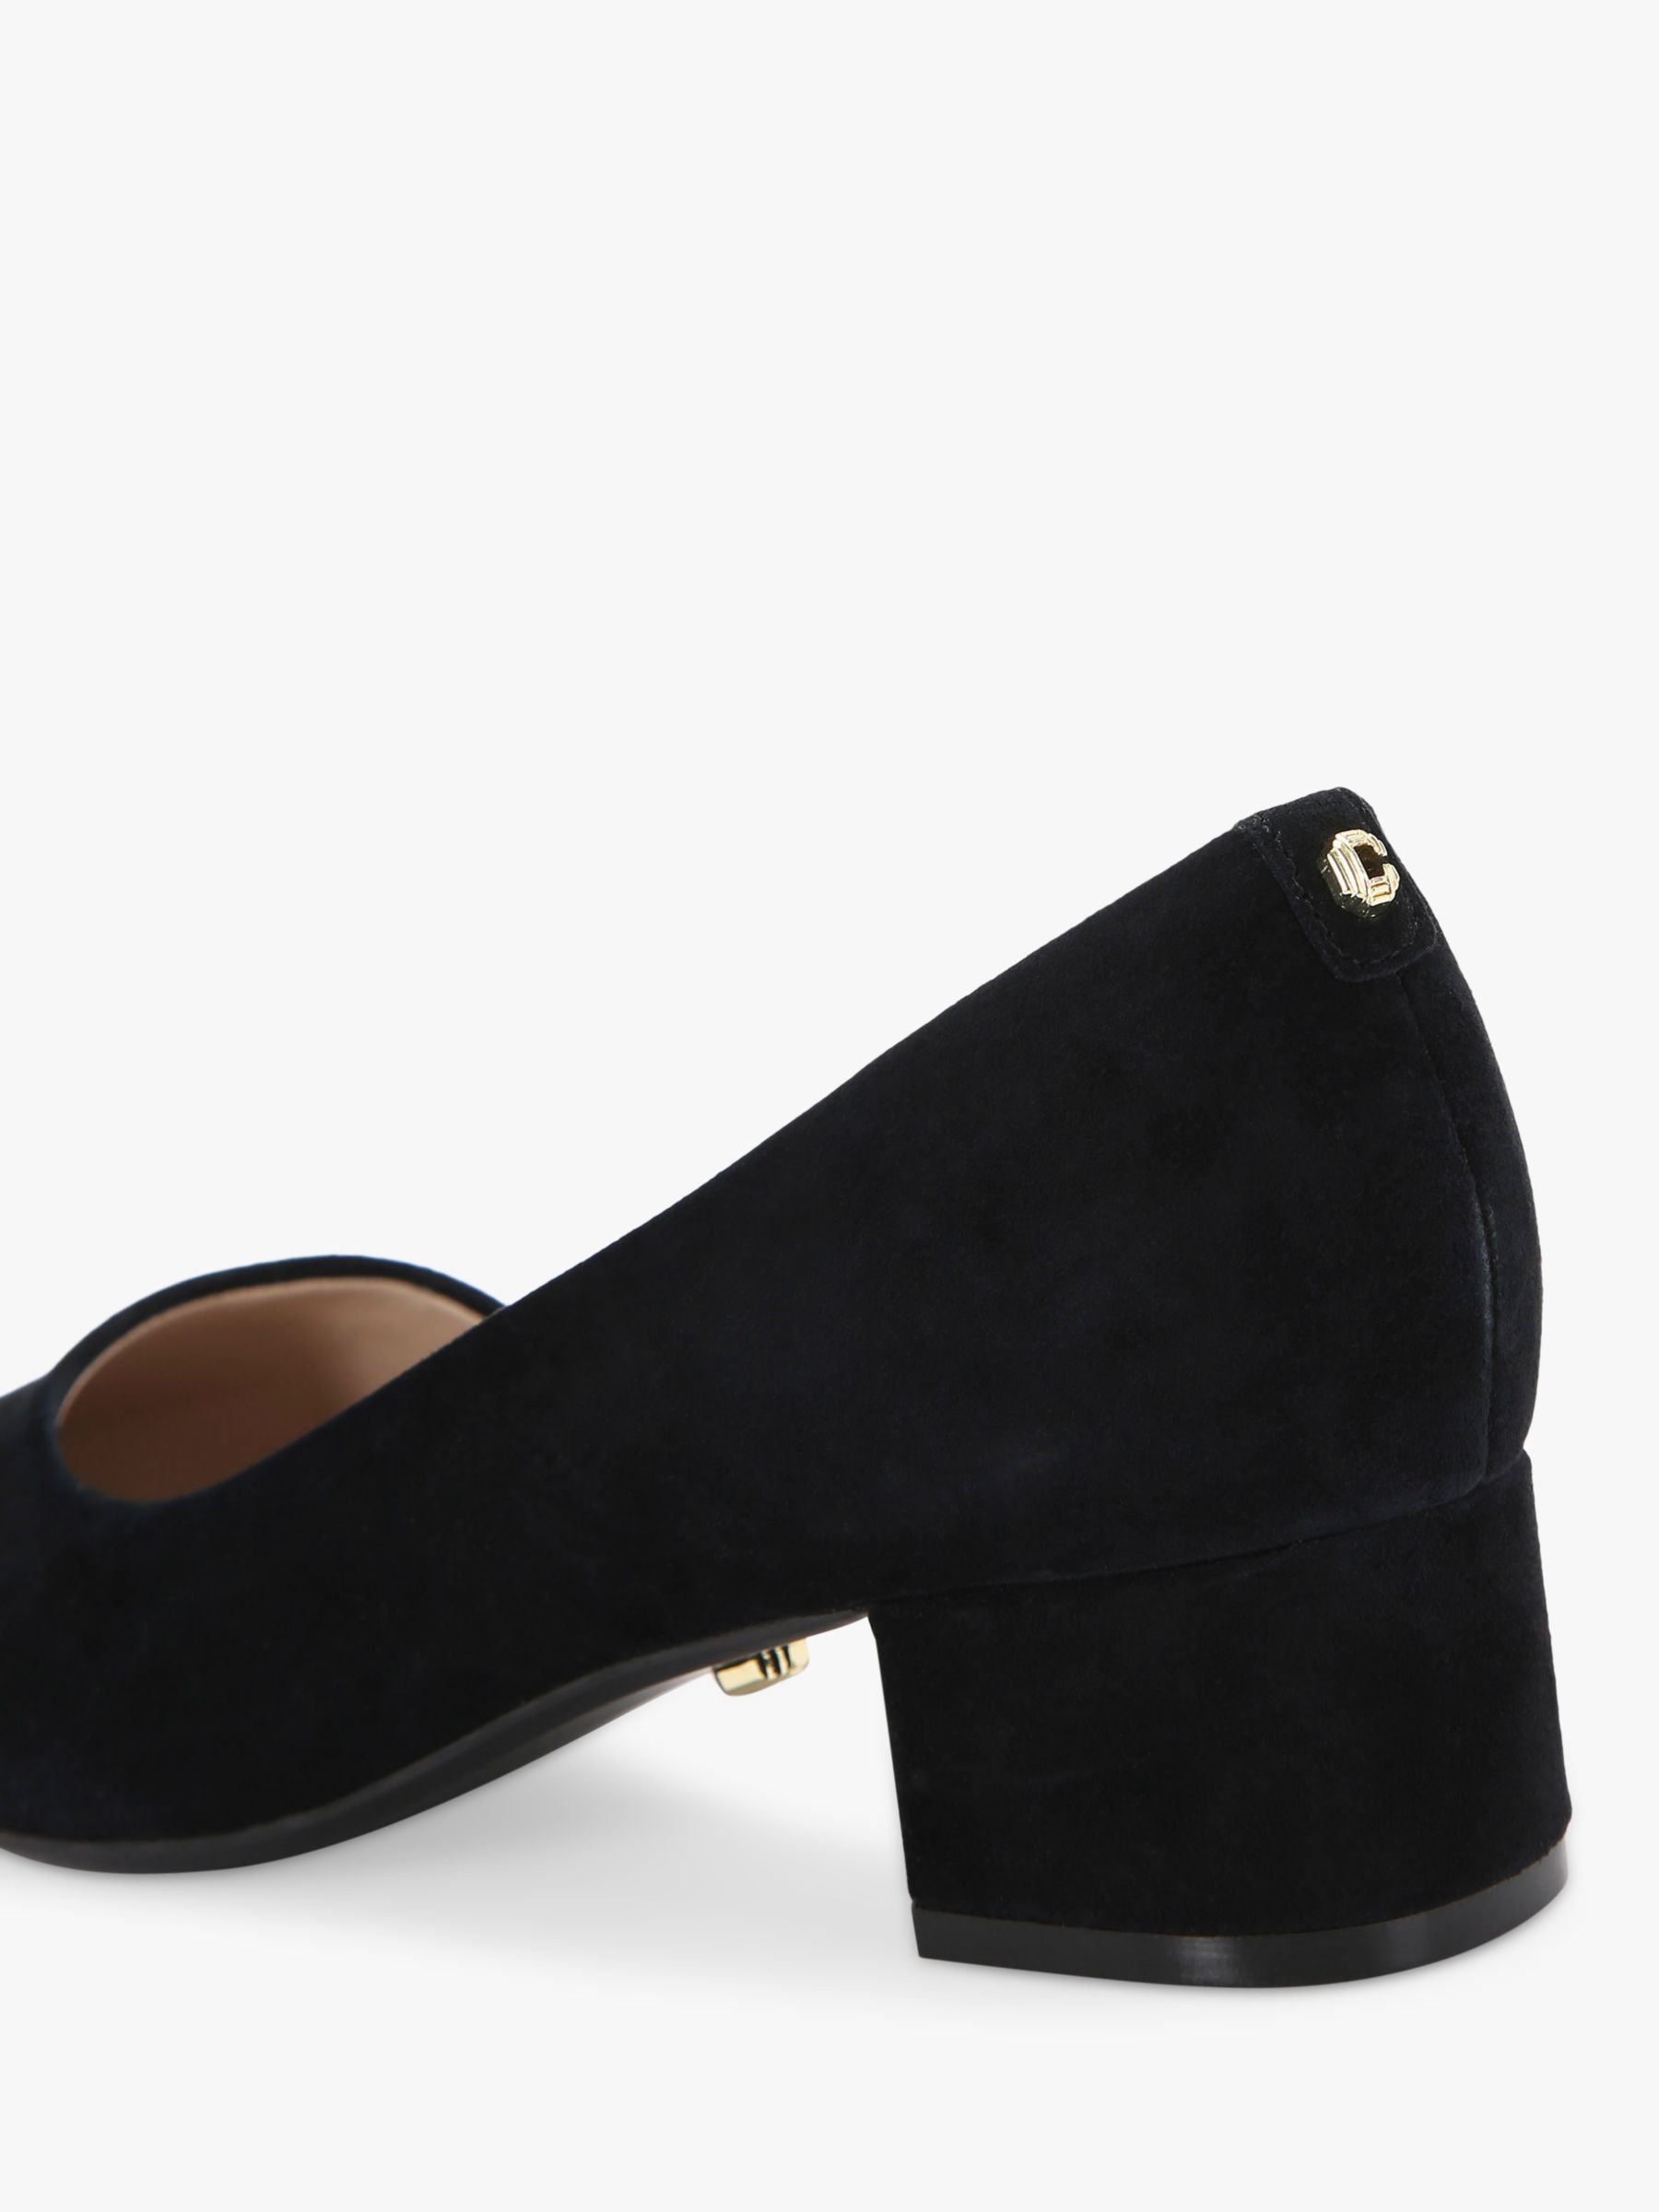 Carvela Camilla Leather Court Shoes, Black, 3